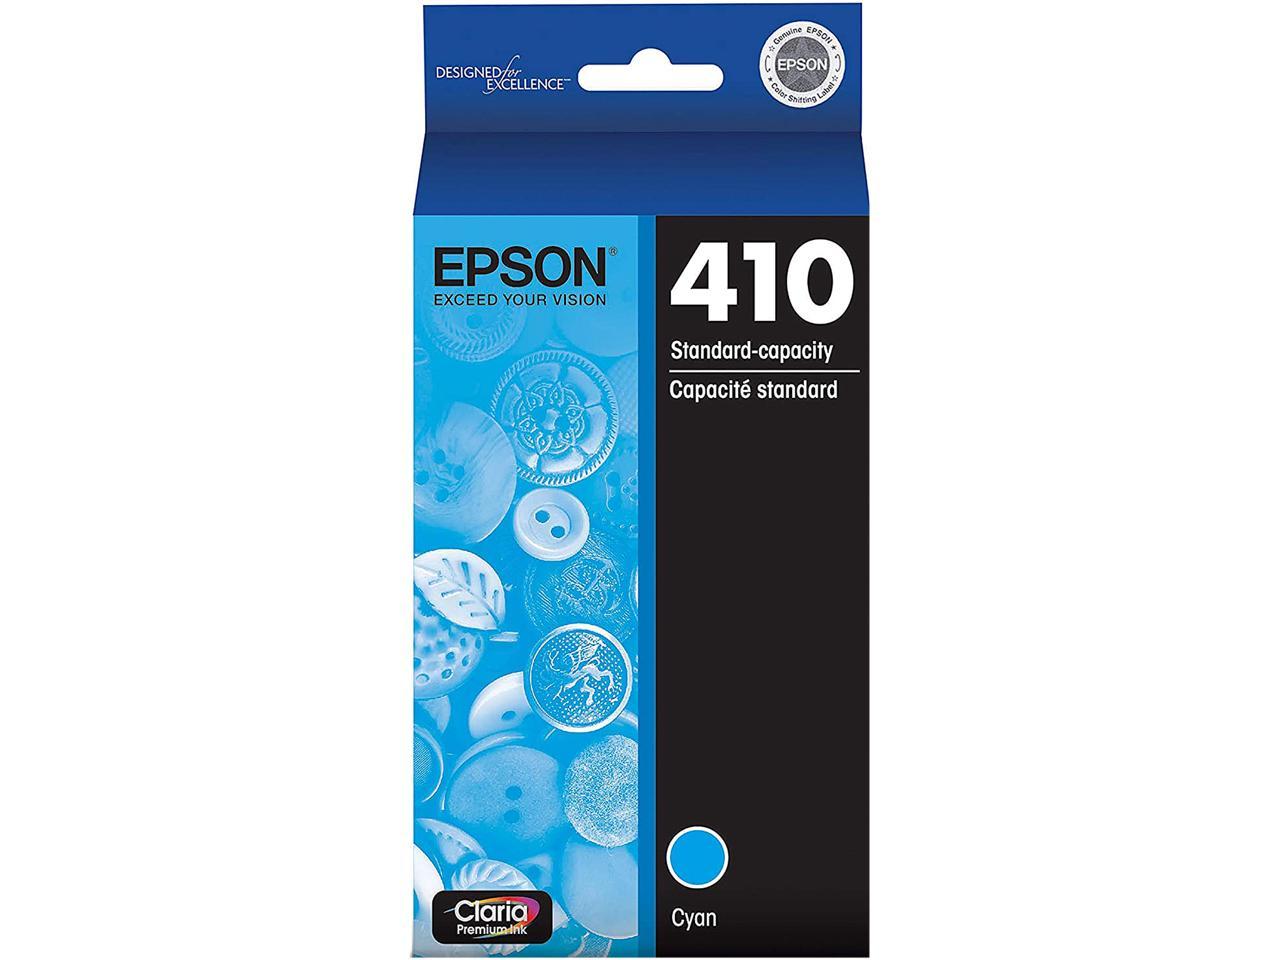 EPSON Claria Premium 410 T410220-S Ink Cartridge Cyan